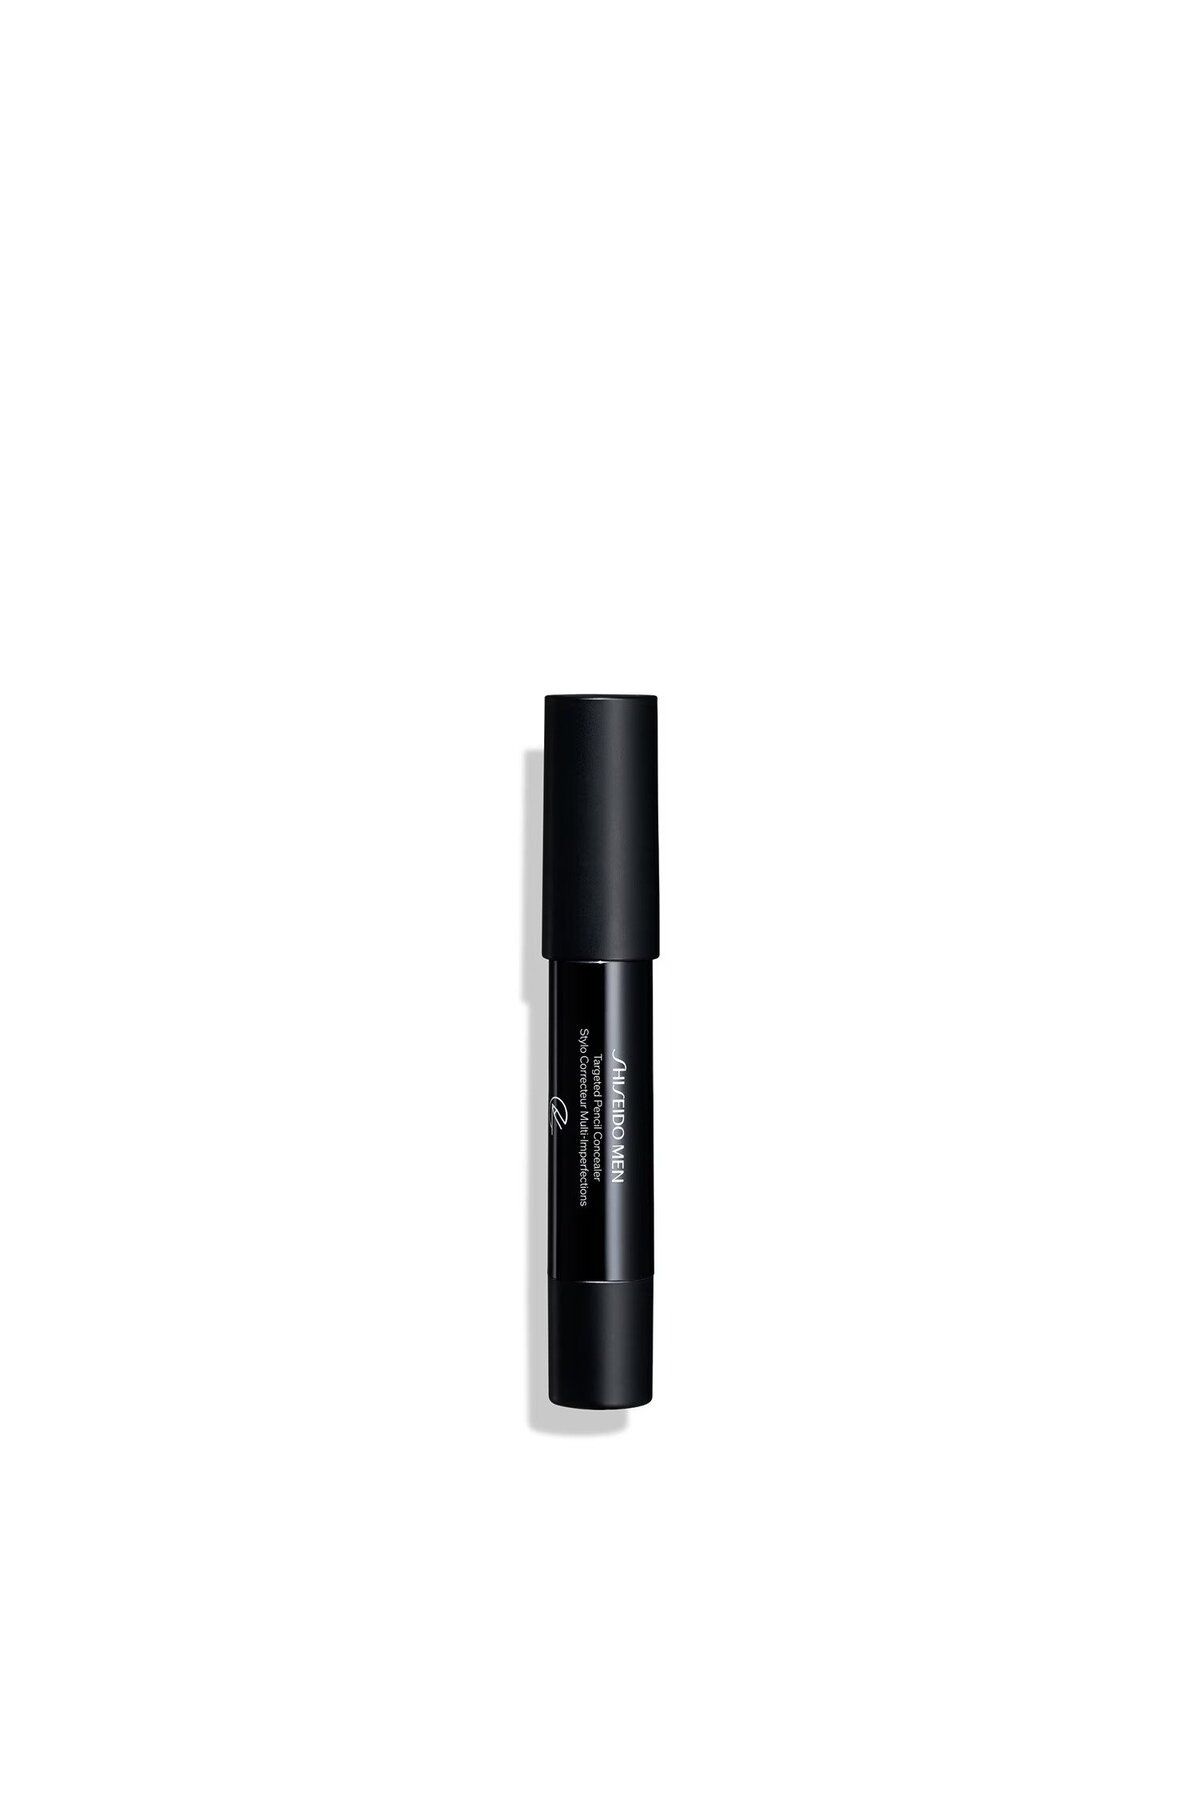 Shiseido مخفی کننده مدادی مردانه برای قرمزی پوست برای تنوع رنگ پوست نامنظم 30 گرم